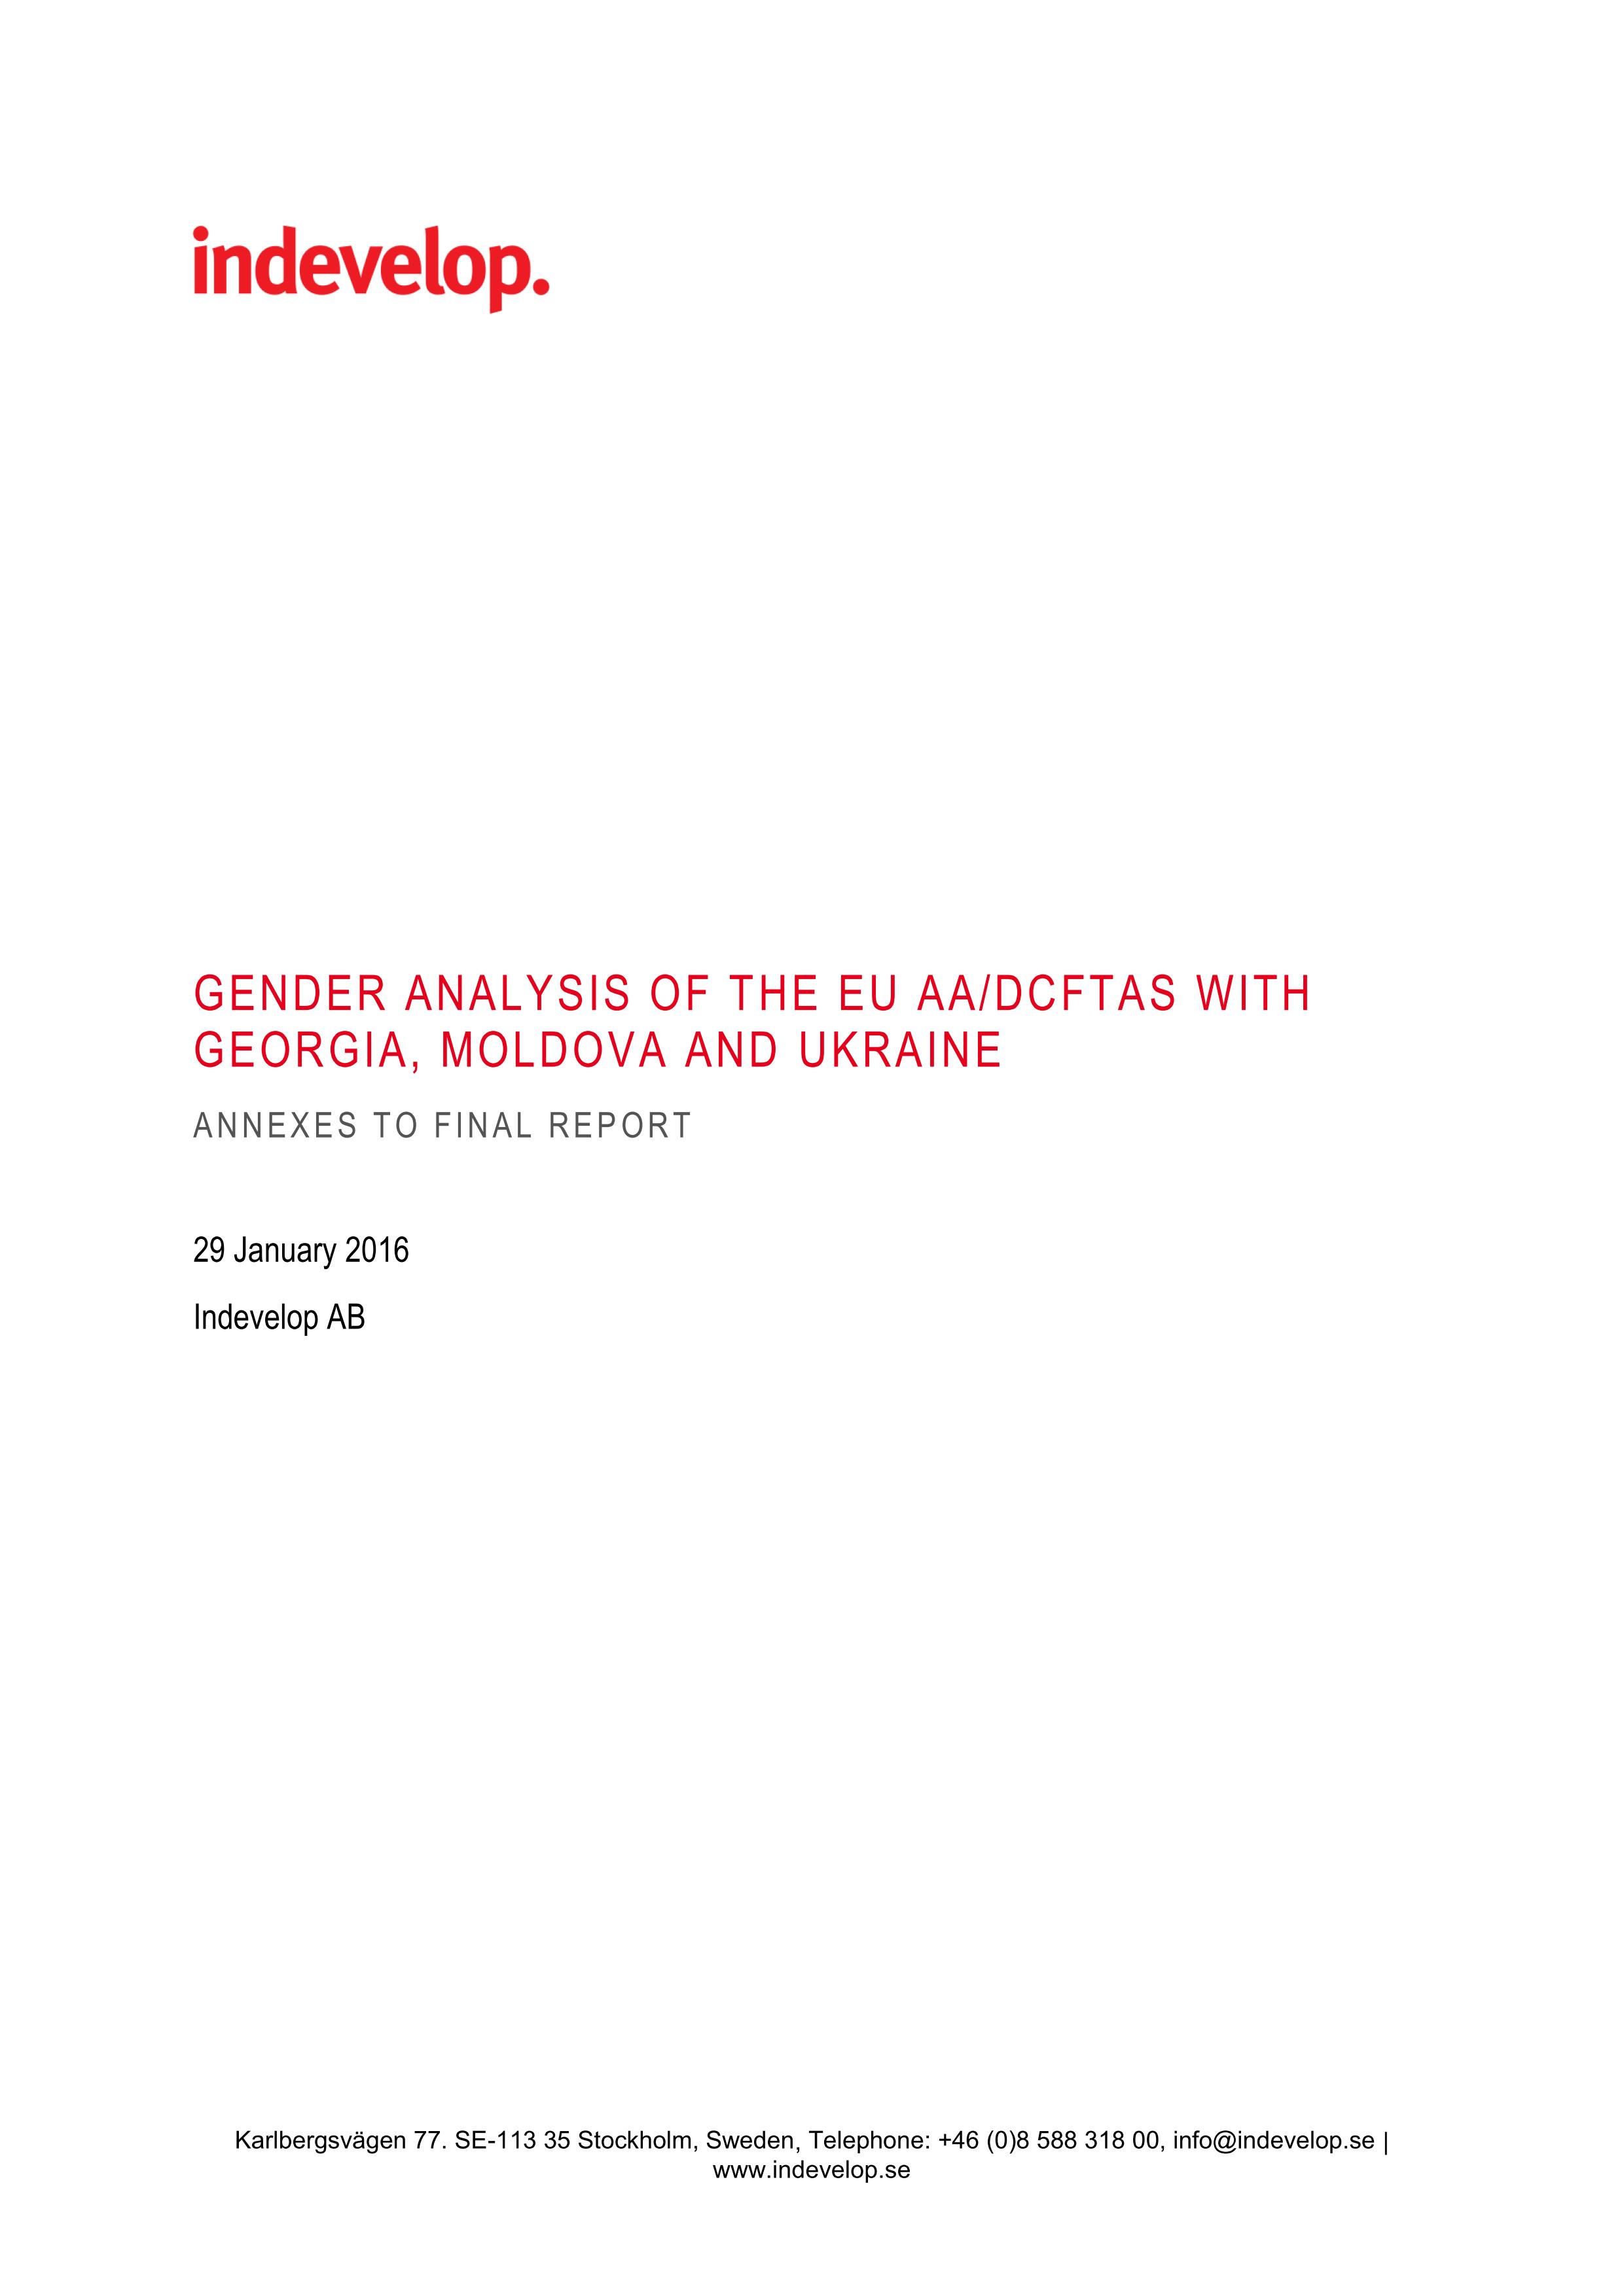 Gender Analysis of the EU AA/DCFTAs with Georgia, Moldova and Ukraine